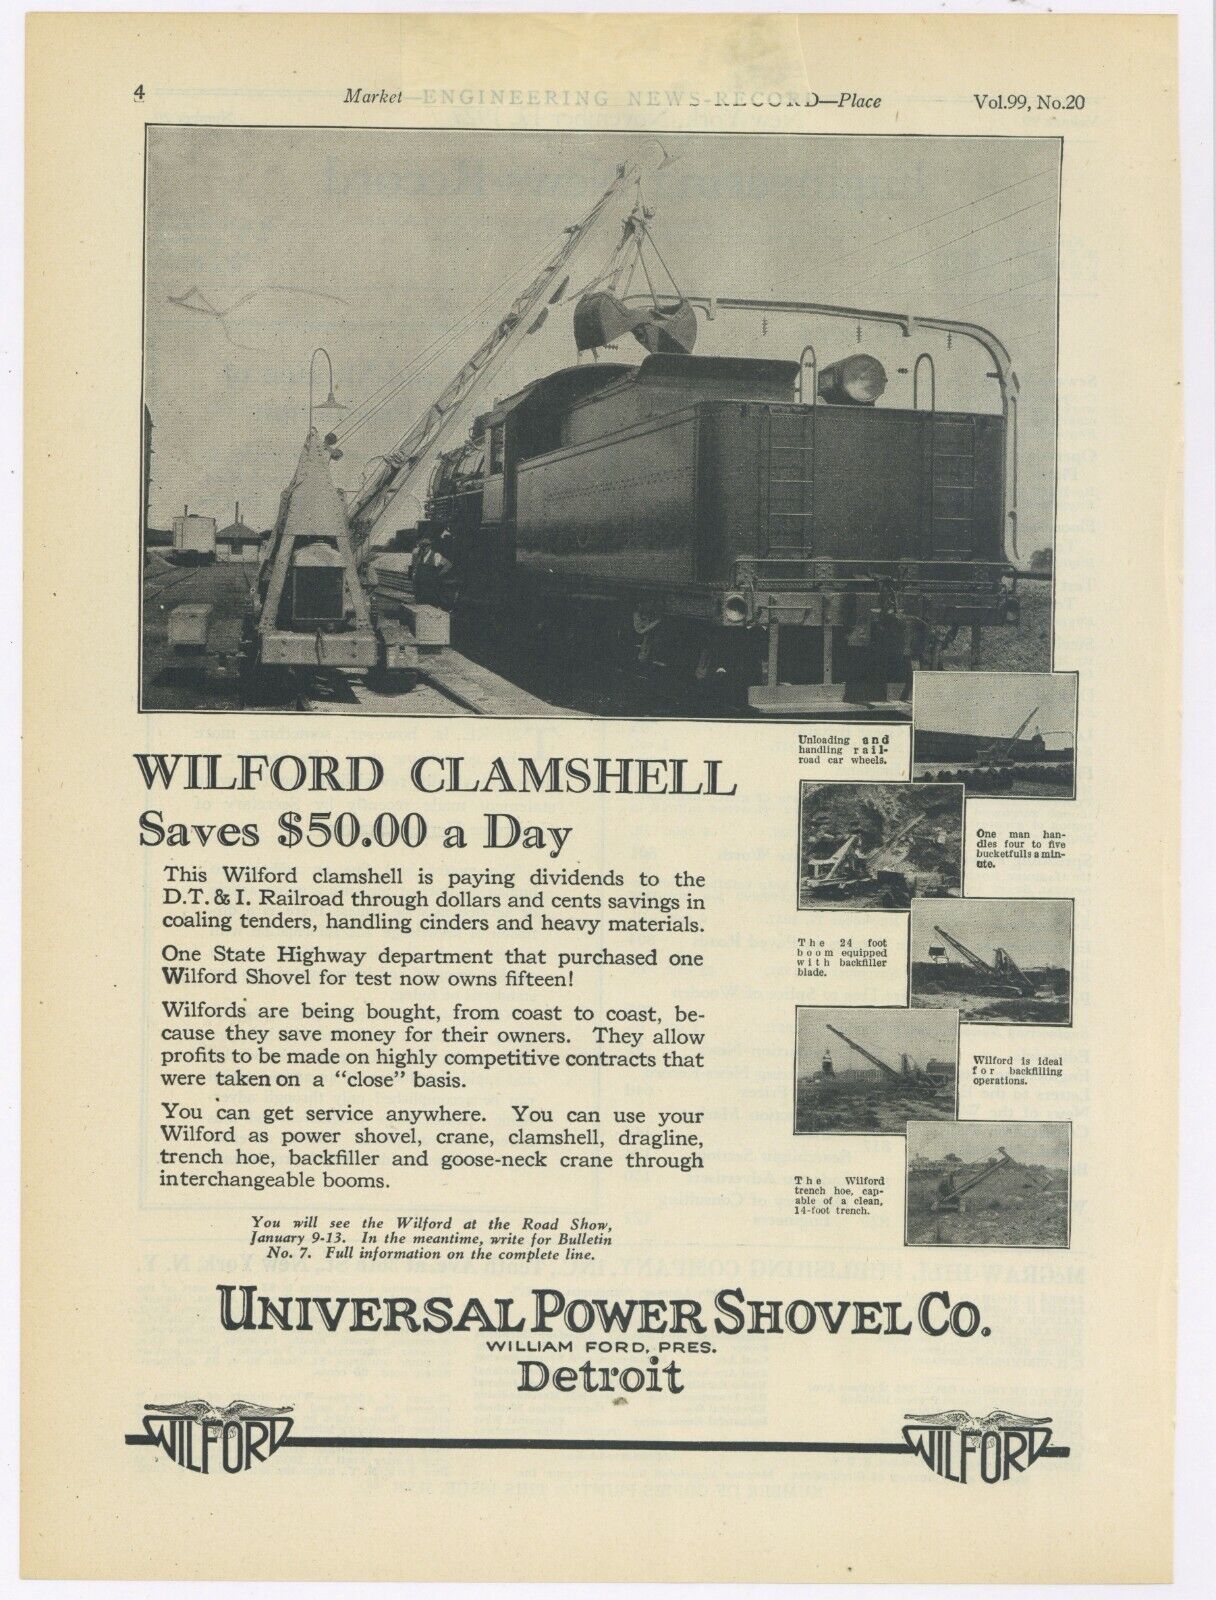 1927 Universal Power Shovel Ad: Wilford Clamshell on DT & I Railroad Loading Job